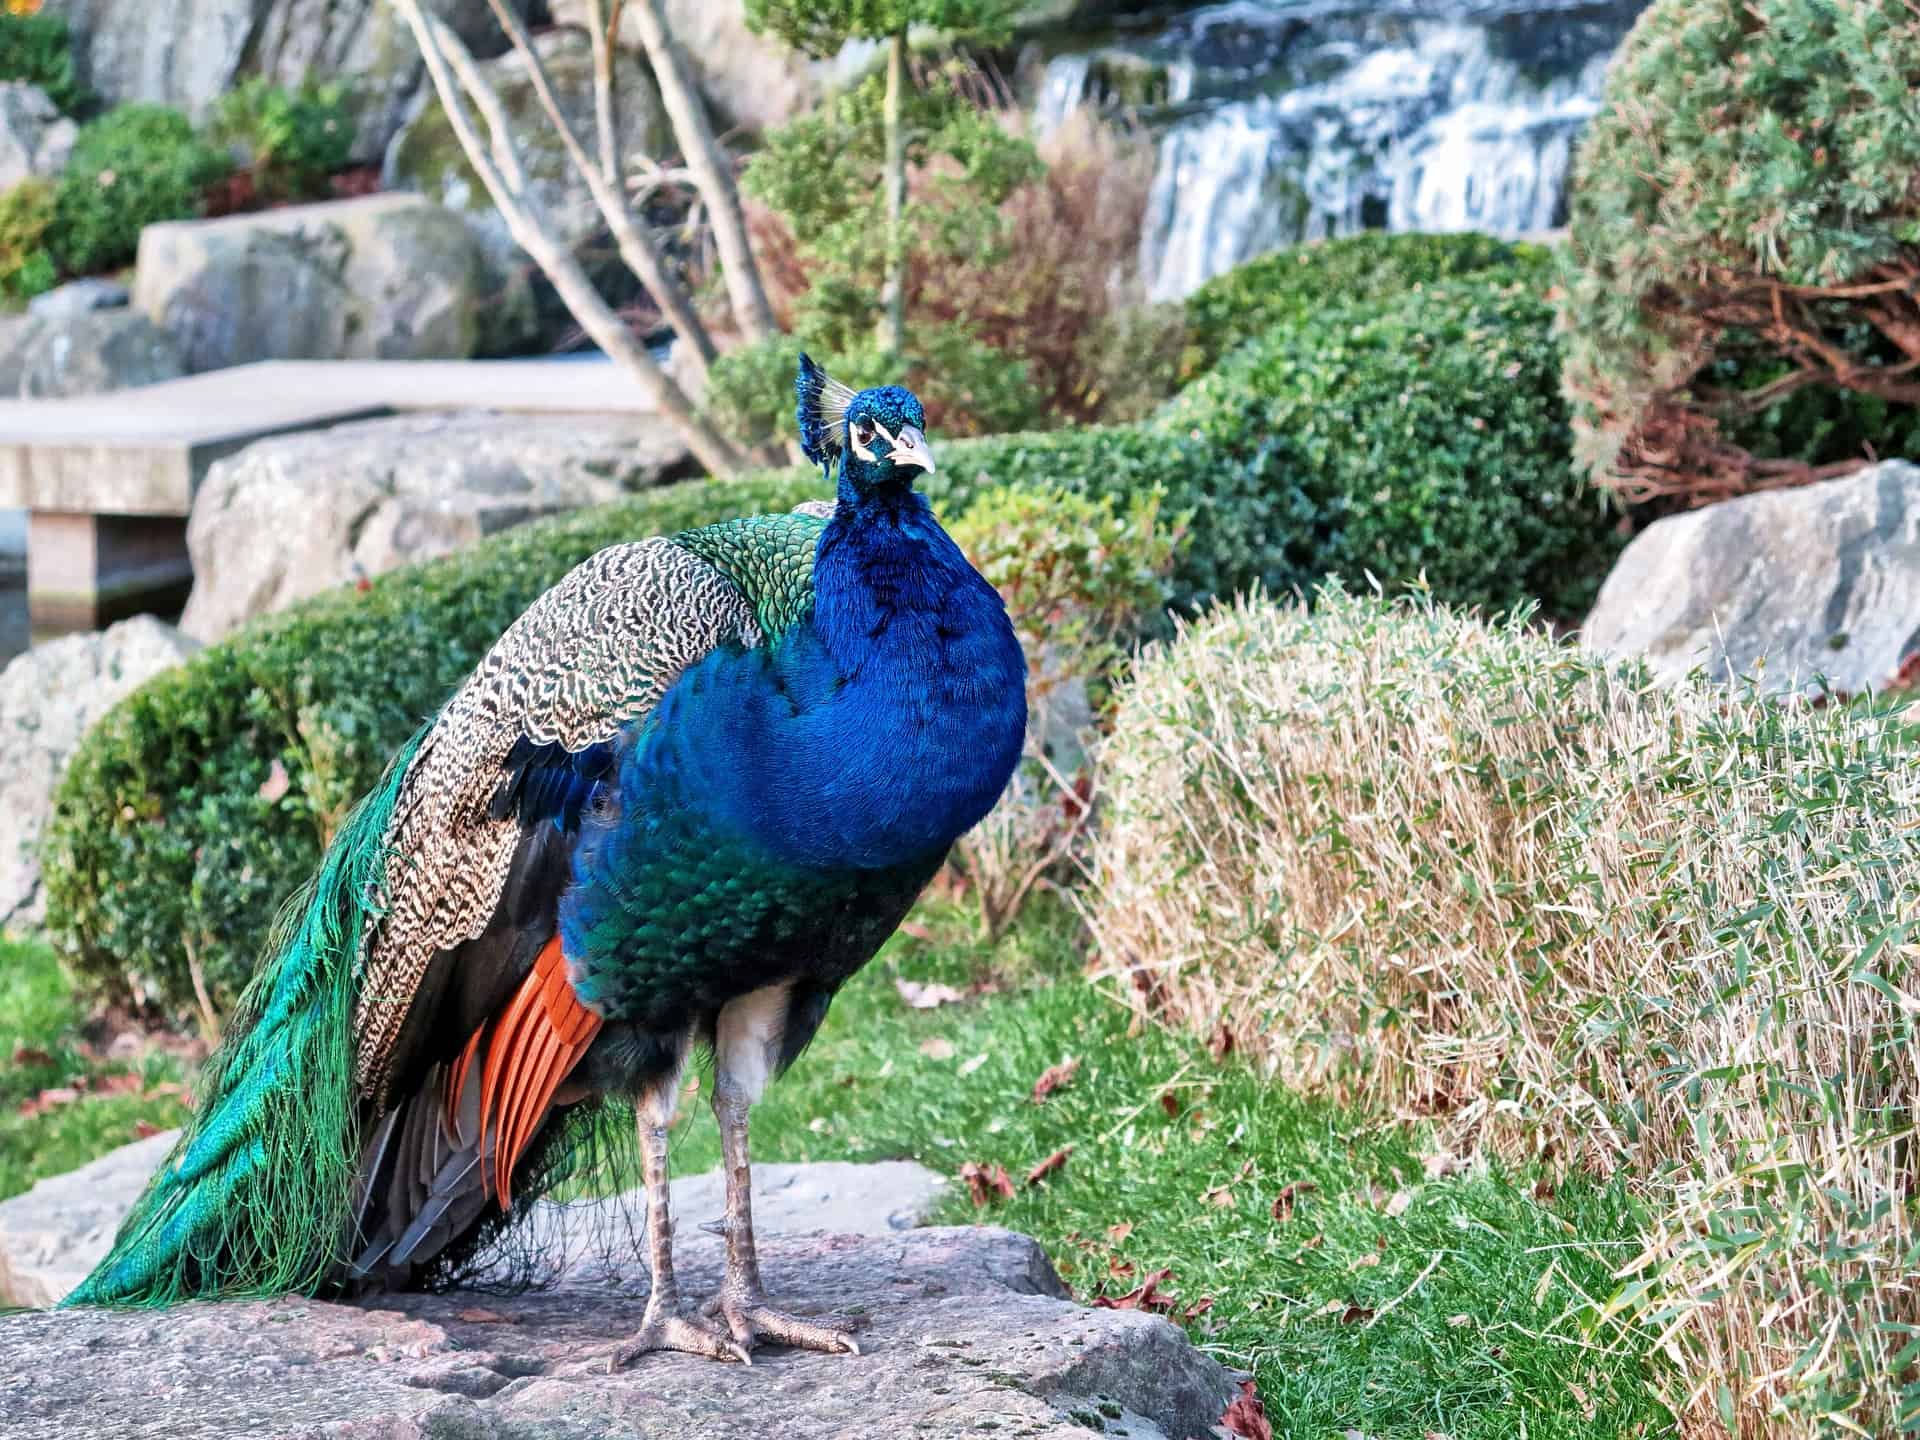 How do peacocks mate